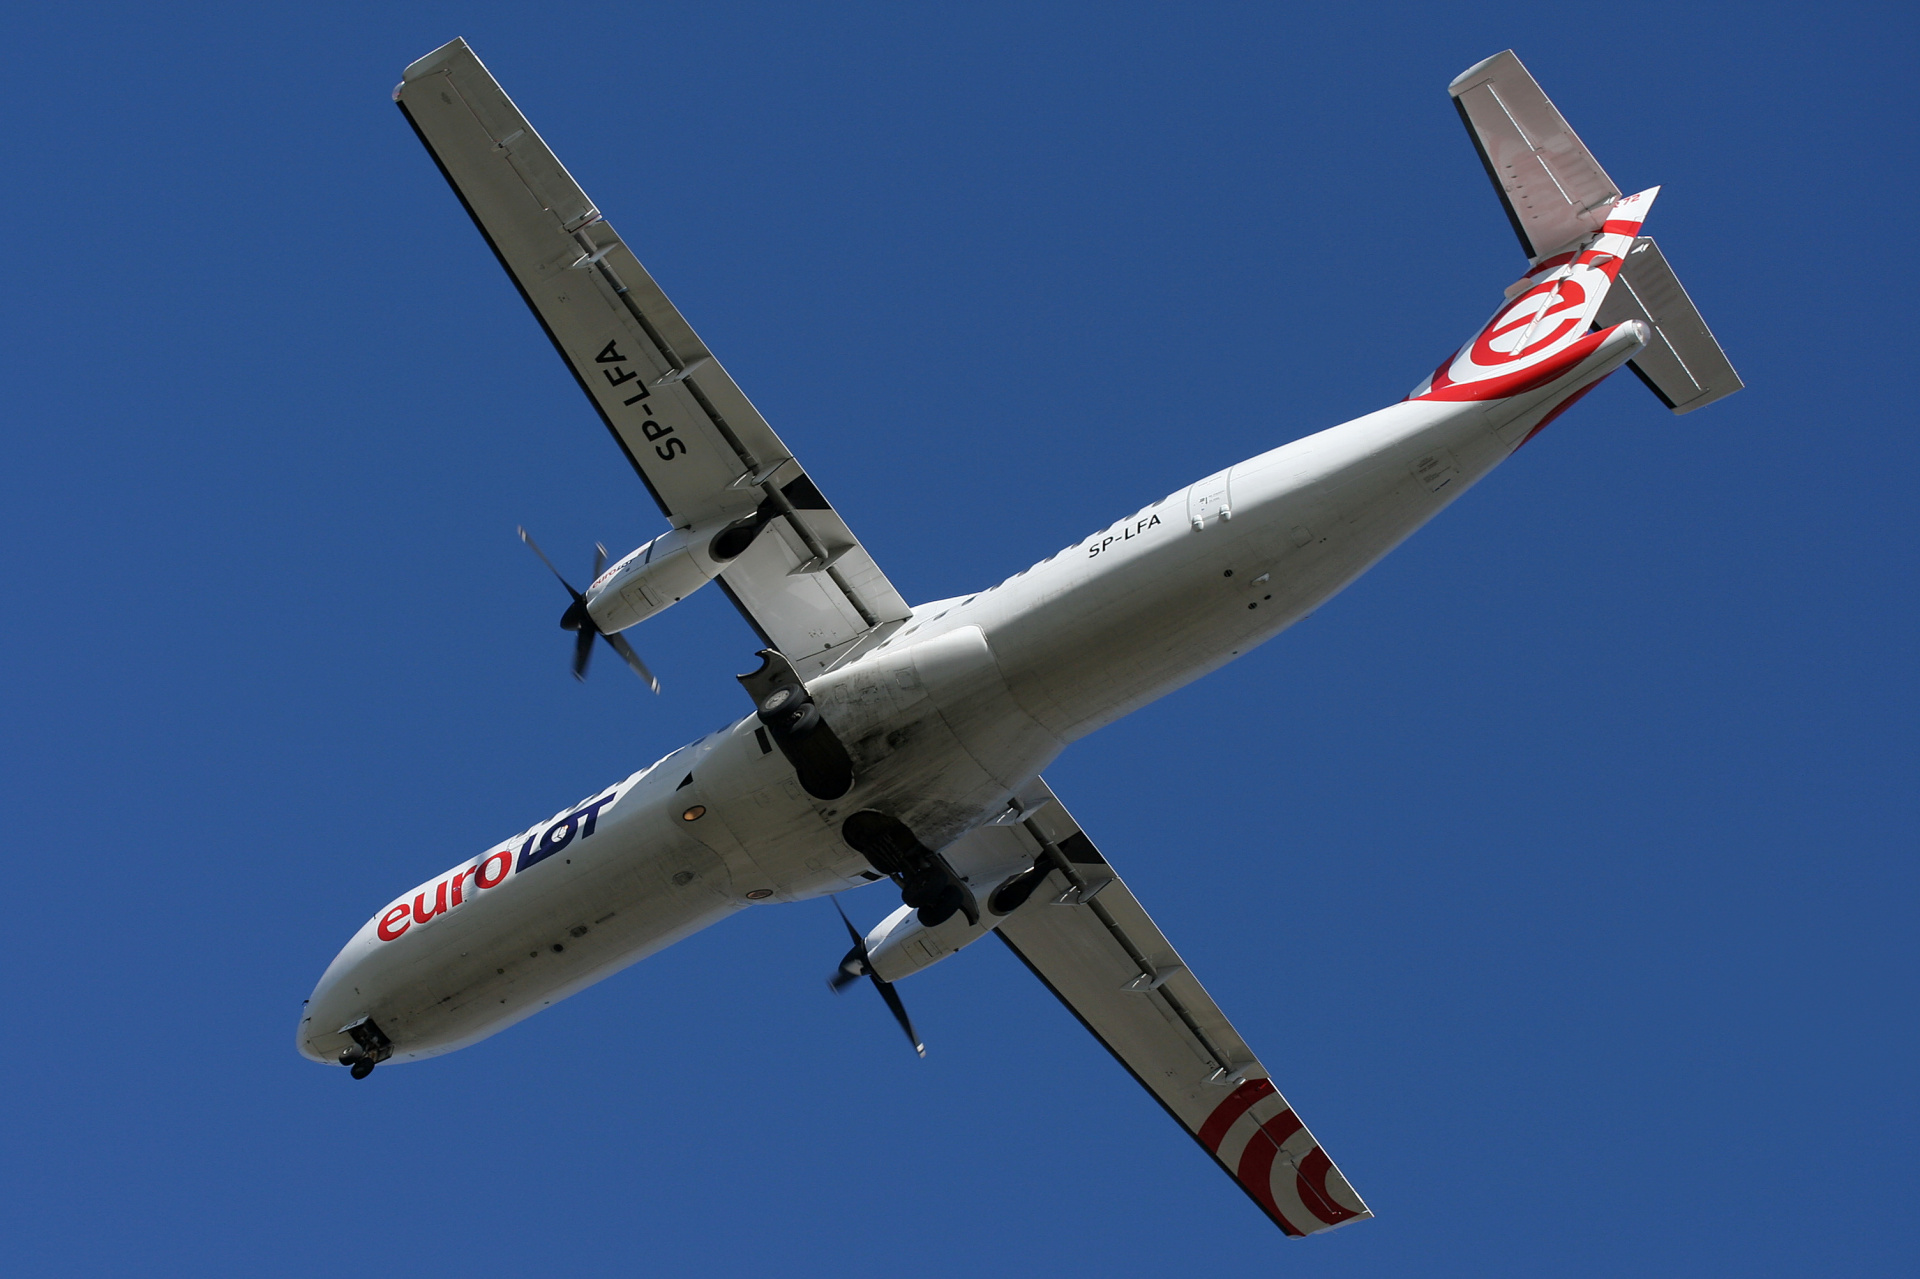 SP-LFA (Aircraft » EPWA Spotting » ATR 72 » EuroLOT)